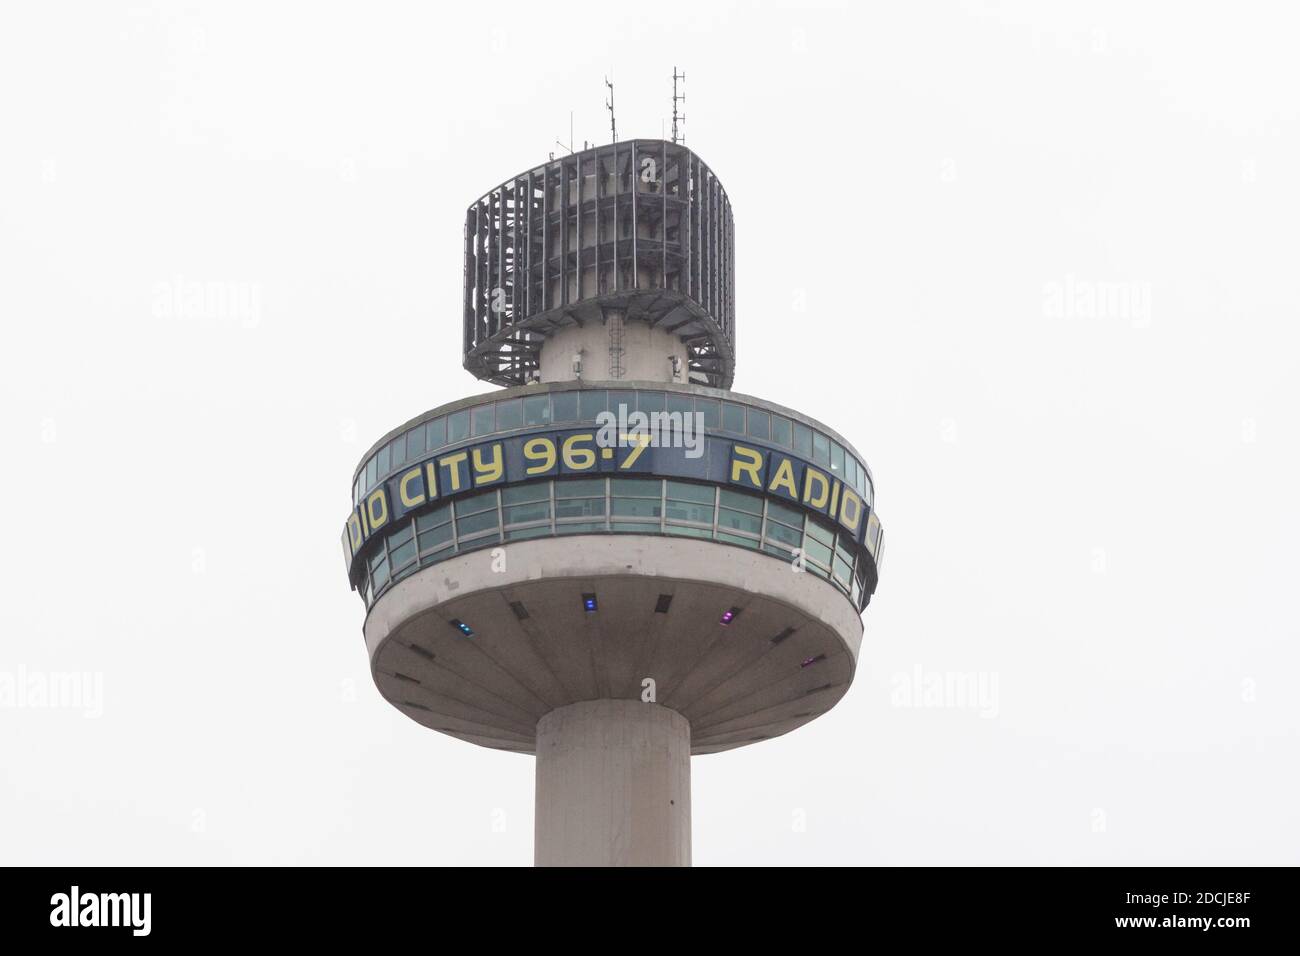 Liverpool city radio tower, St. John's Beacon, radio city 96.7, liverpool Stock Photo